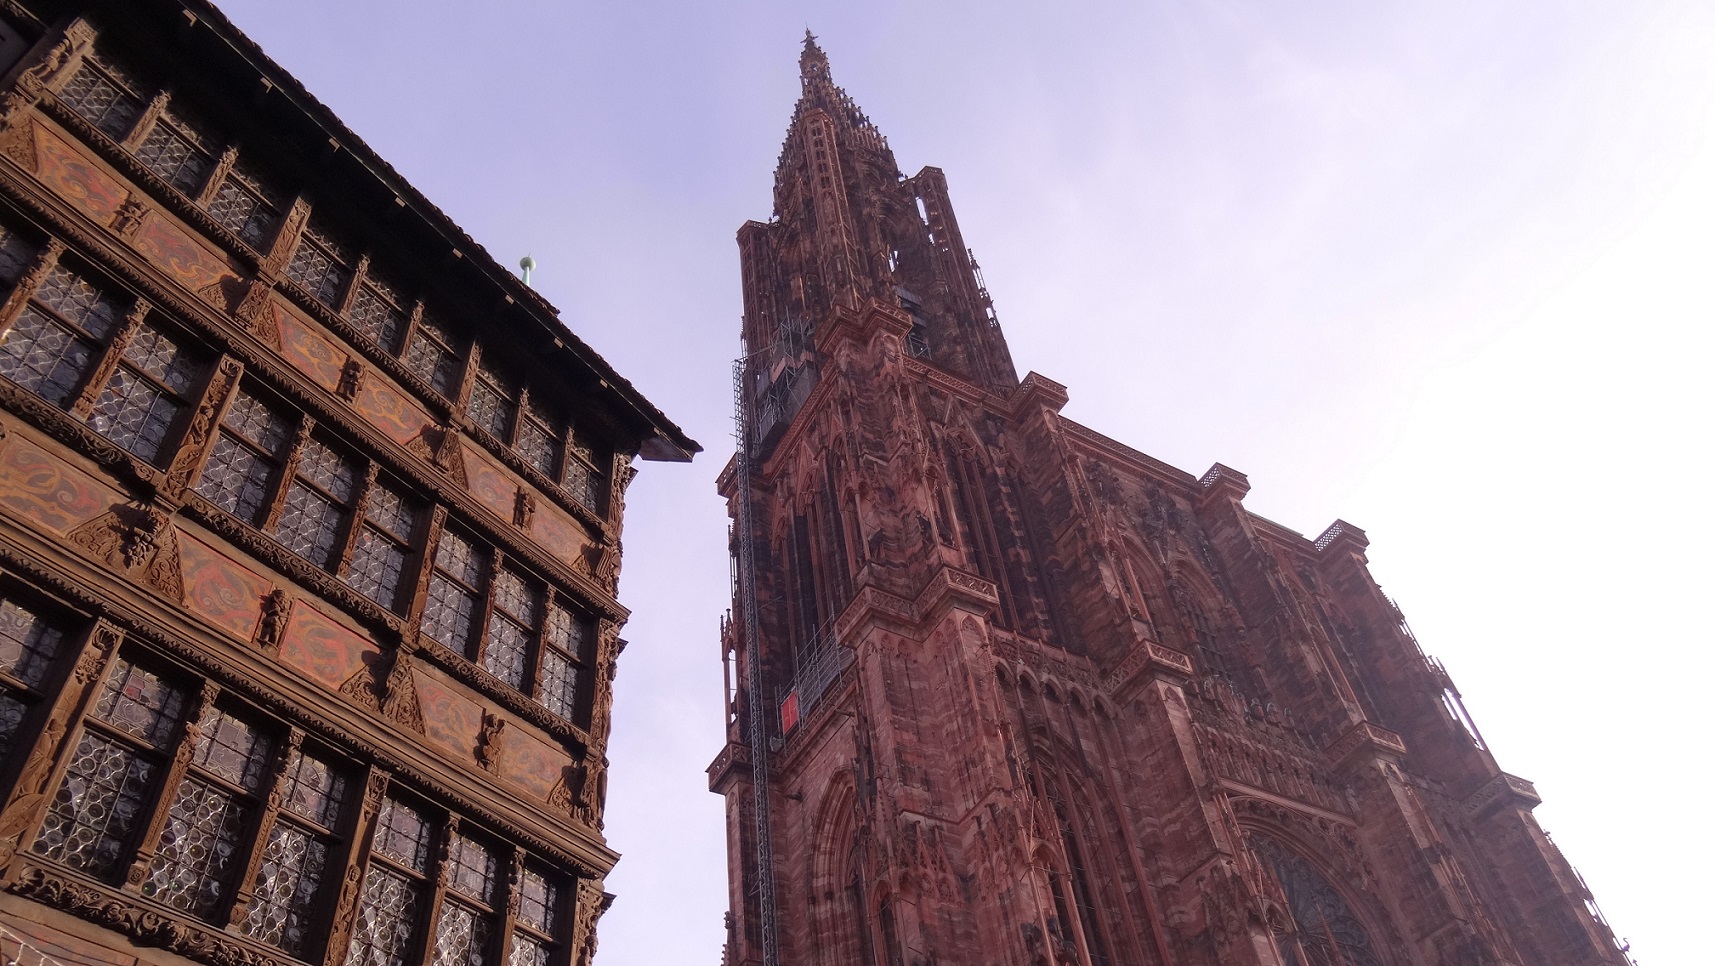 Maison Kammerzell et cathédrale Notre-Dame de Strasbourg